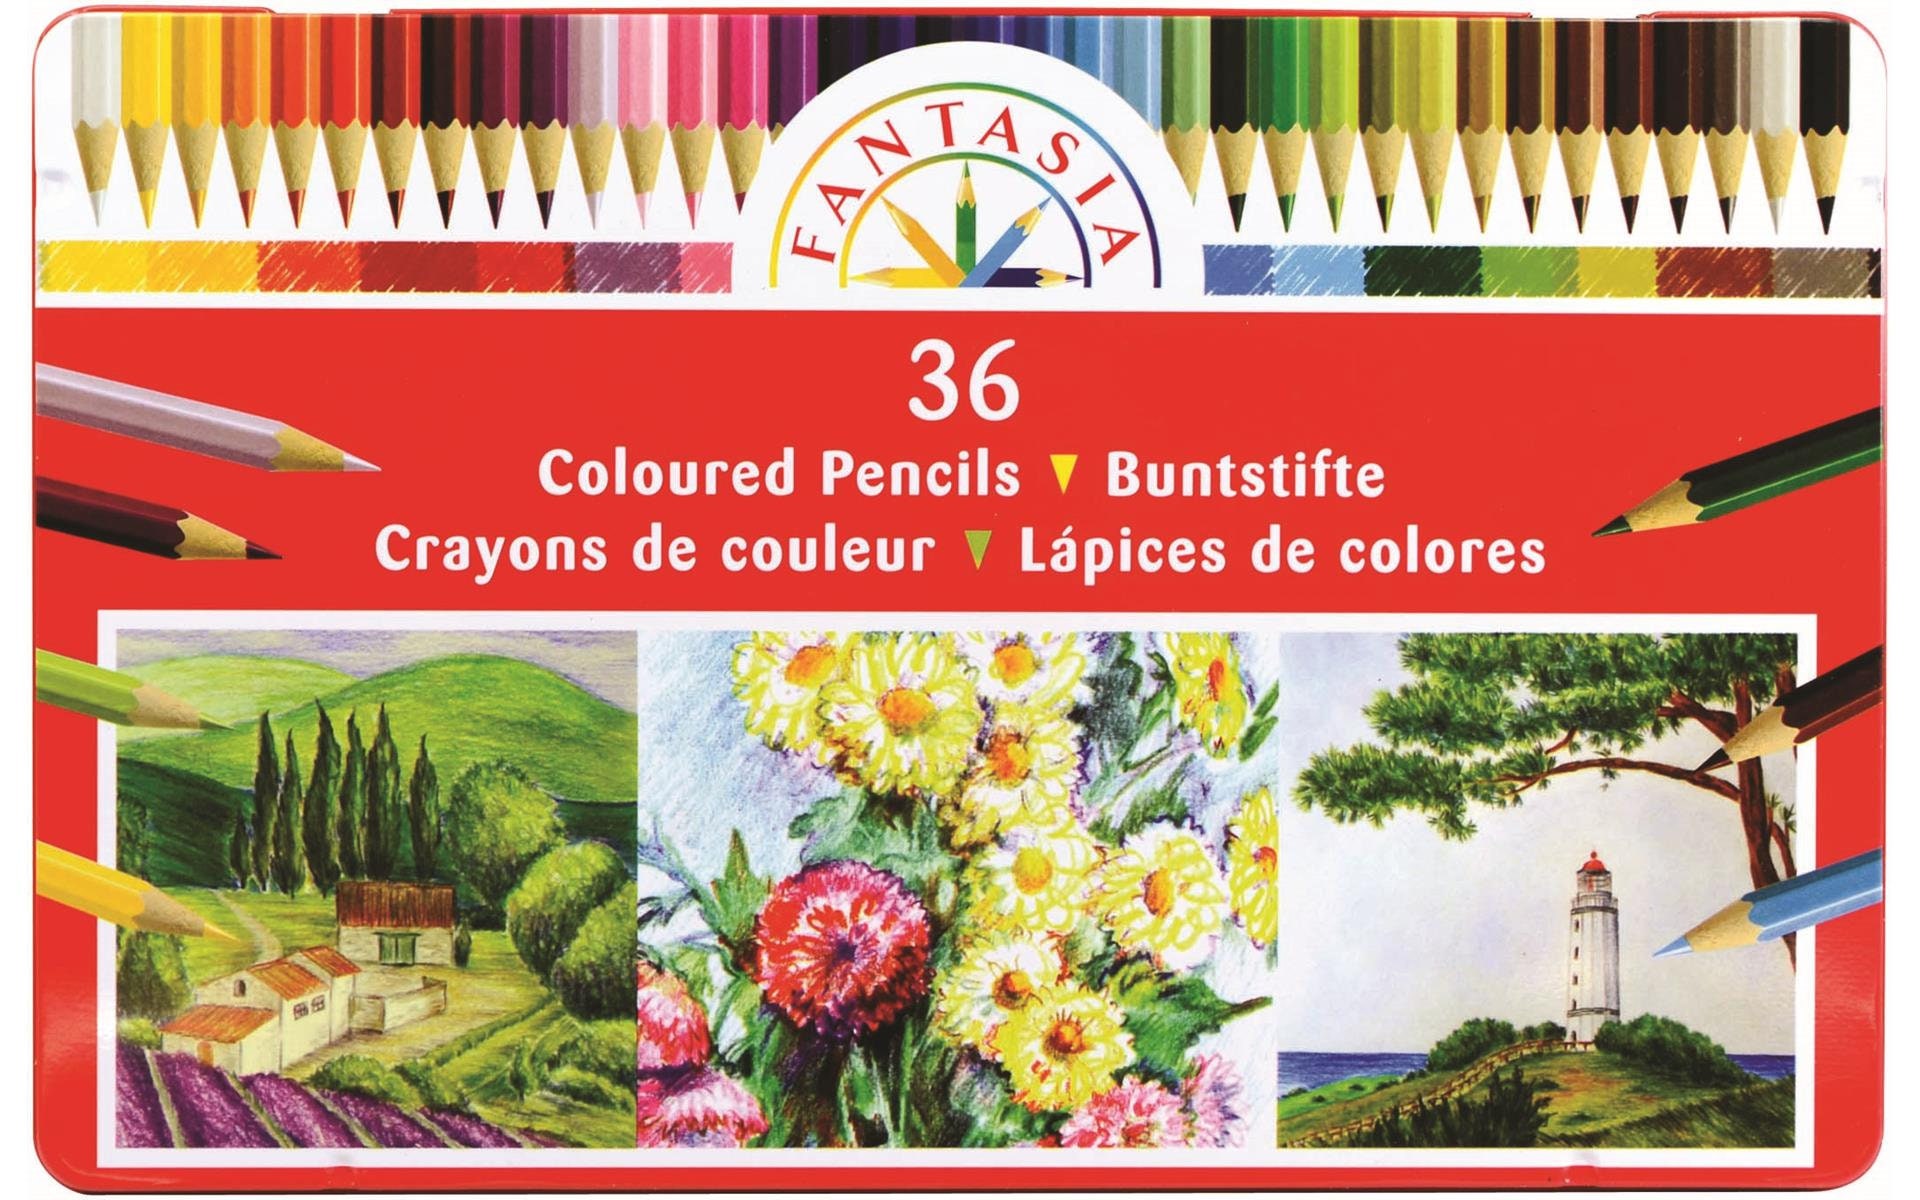 Fantasia Colored Pencil Set - Assorted Colors, Tin Box, Set of 24